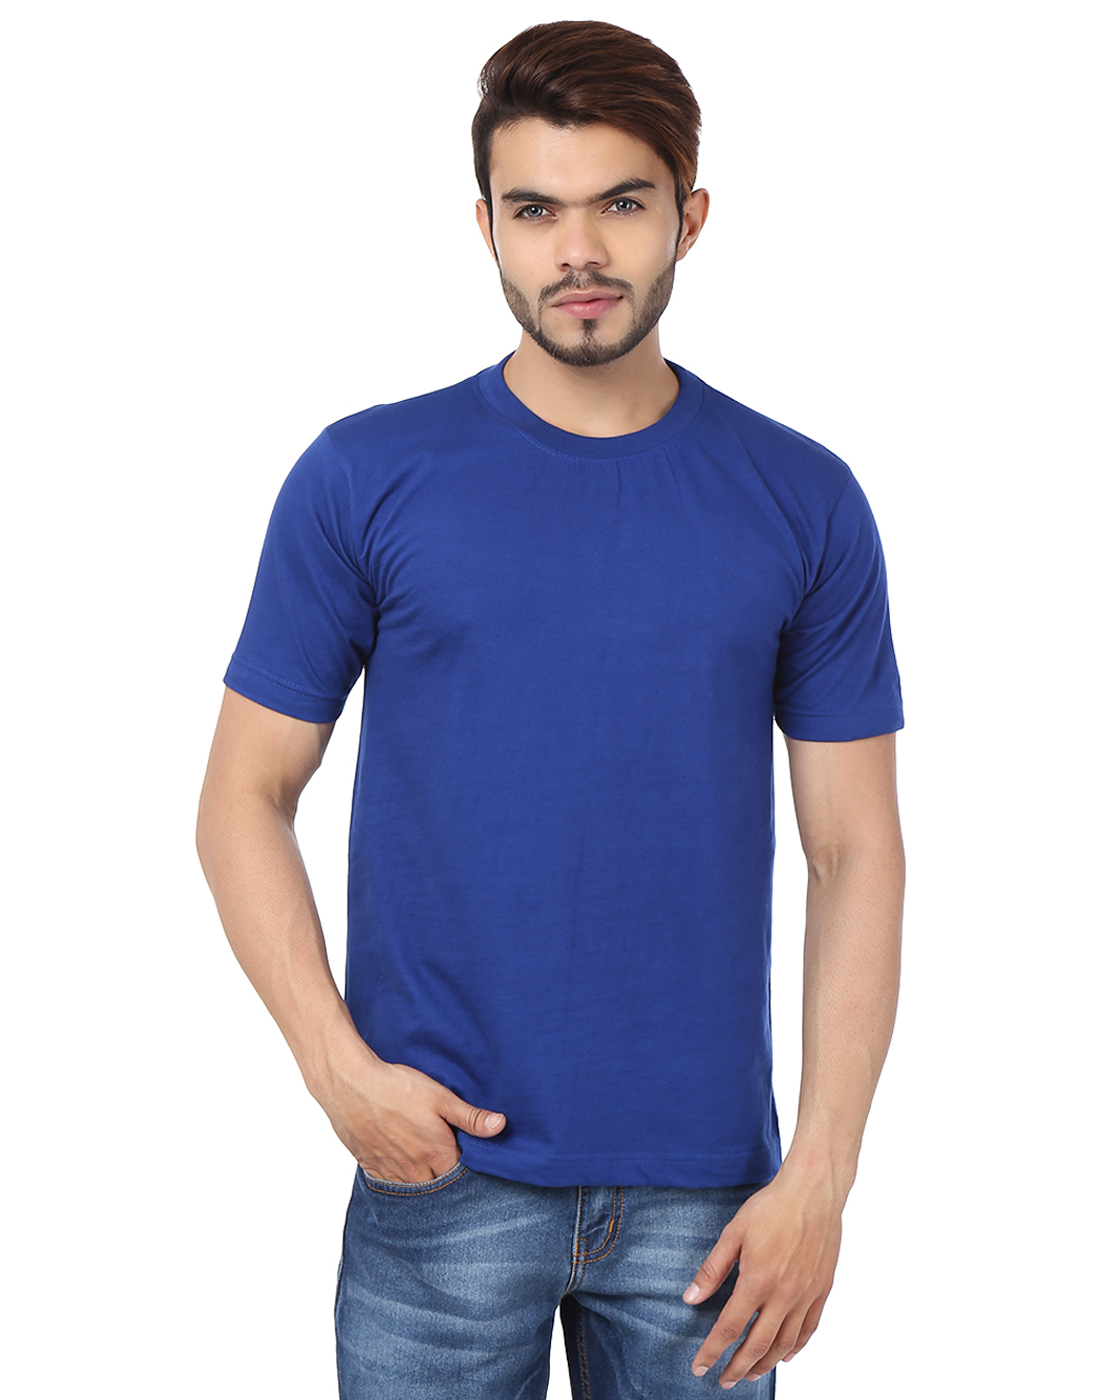 Buy Weardo Plain Royal Blue Crew Neck T-Shirt Online @ ₹278 from ShopClues